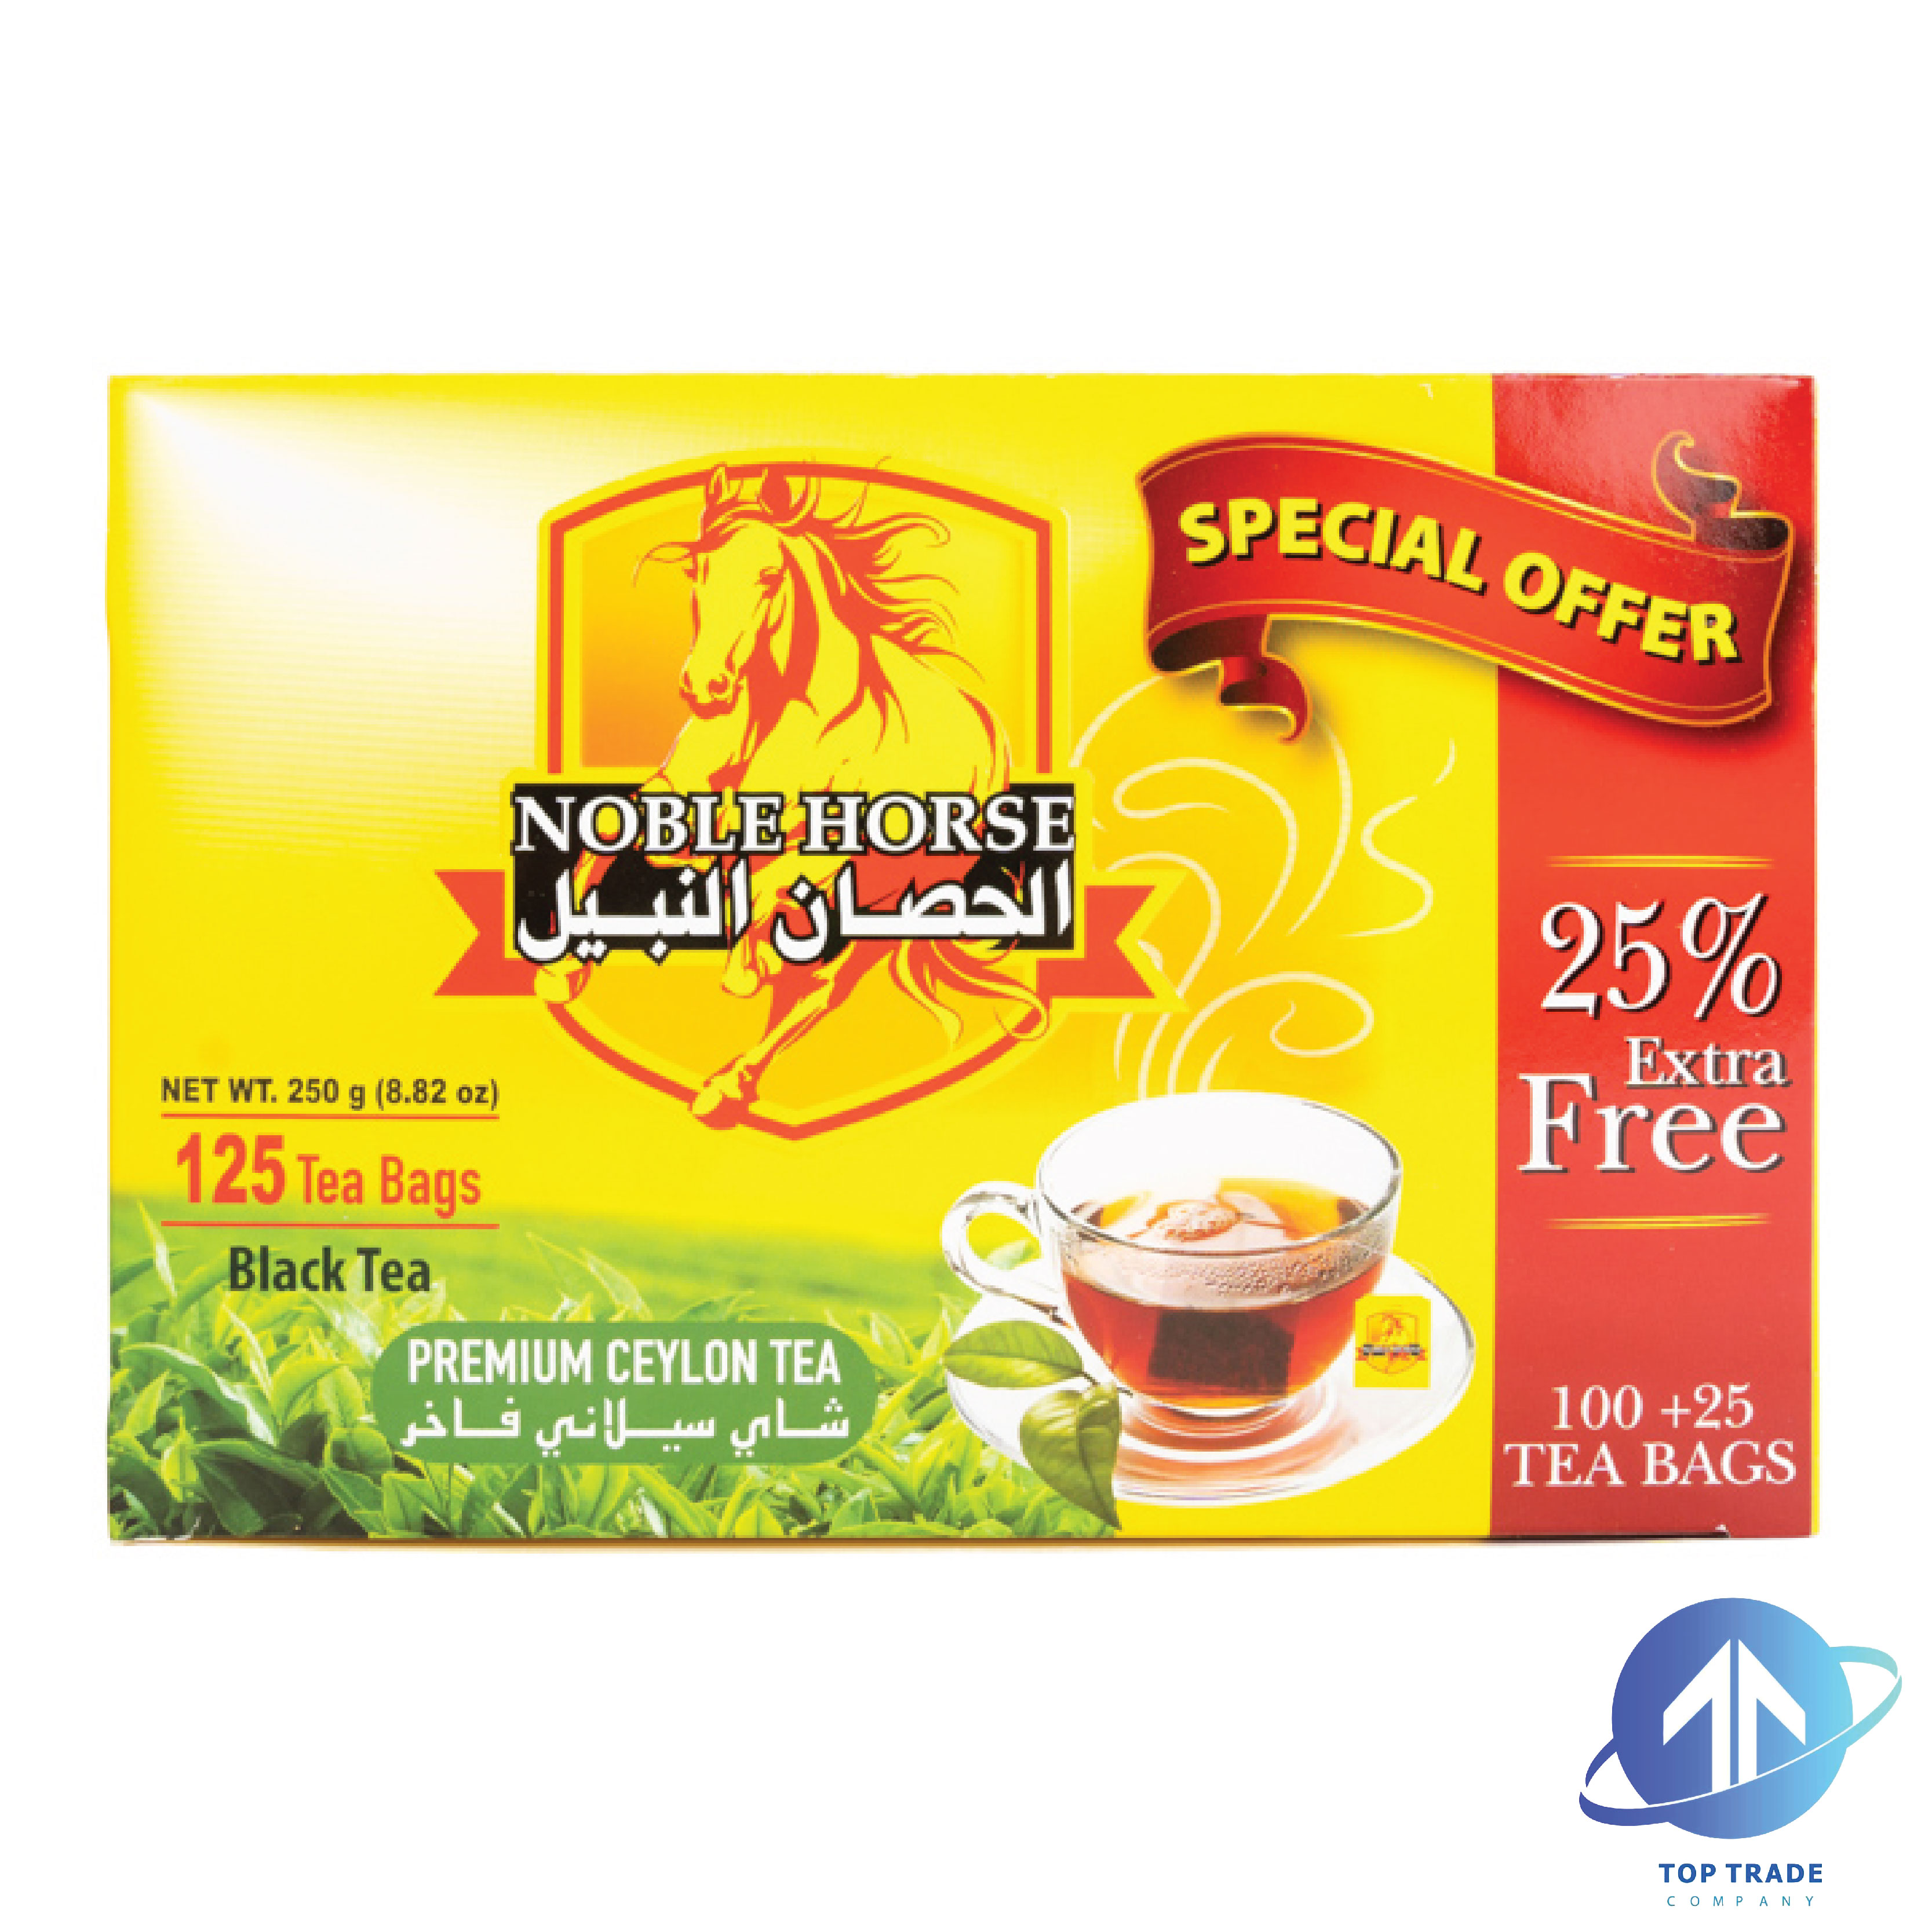 Noble Horse Ceylon Black Tea bags 125